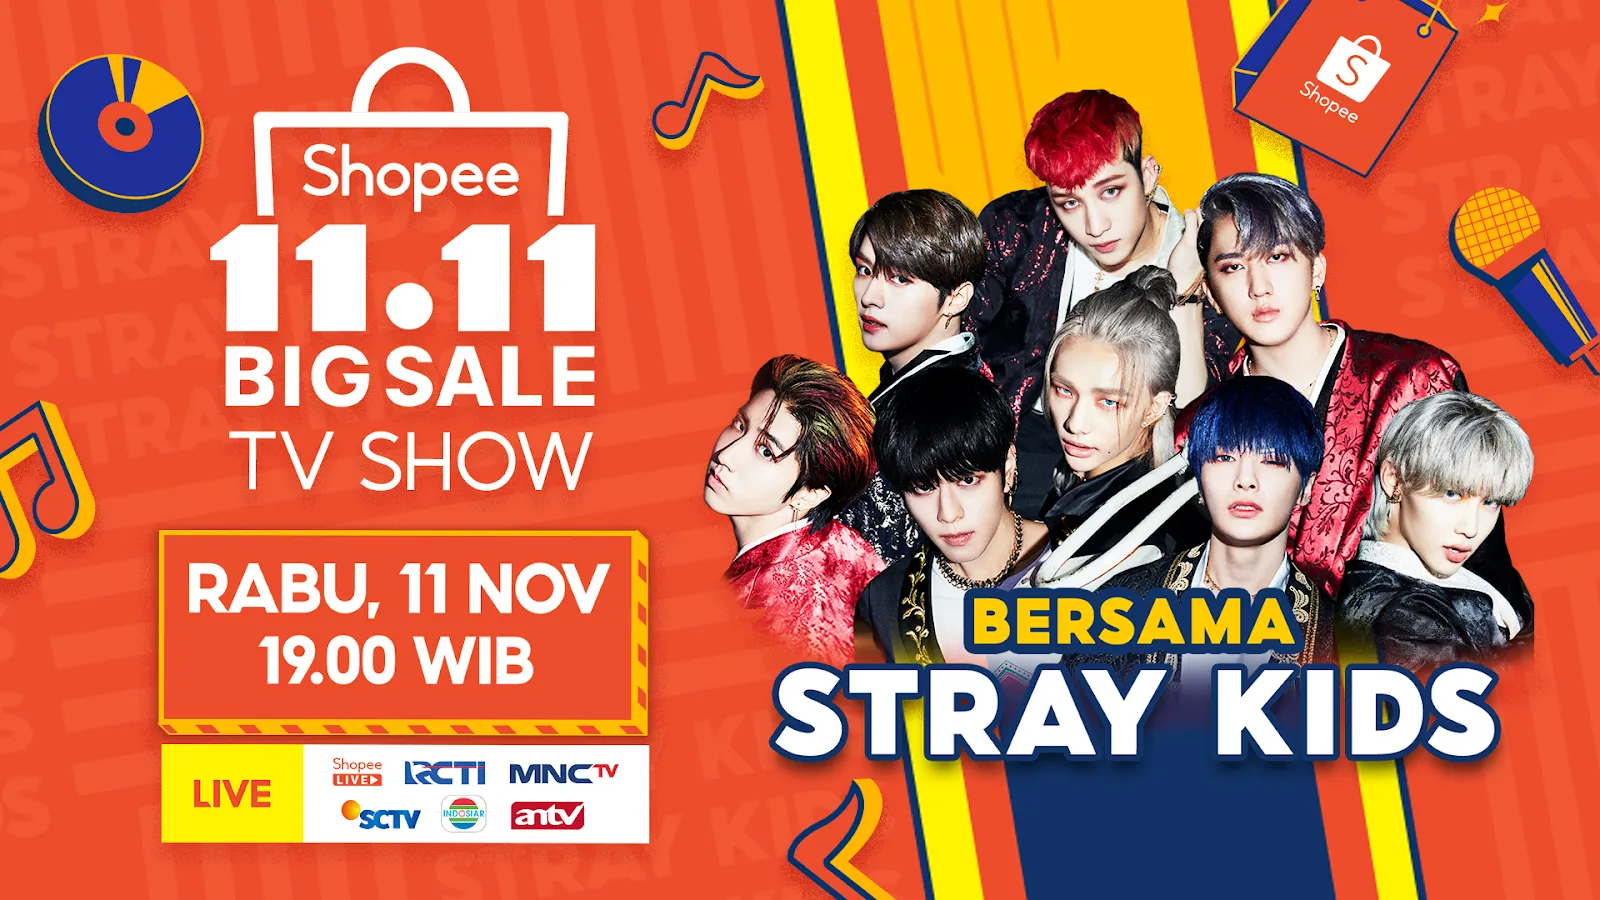 Shopee Tampilkan BA Baru Stray Kids di TV Show Shopee 11.11 Big Sale